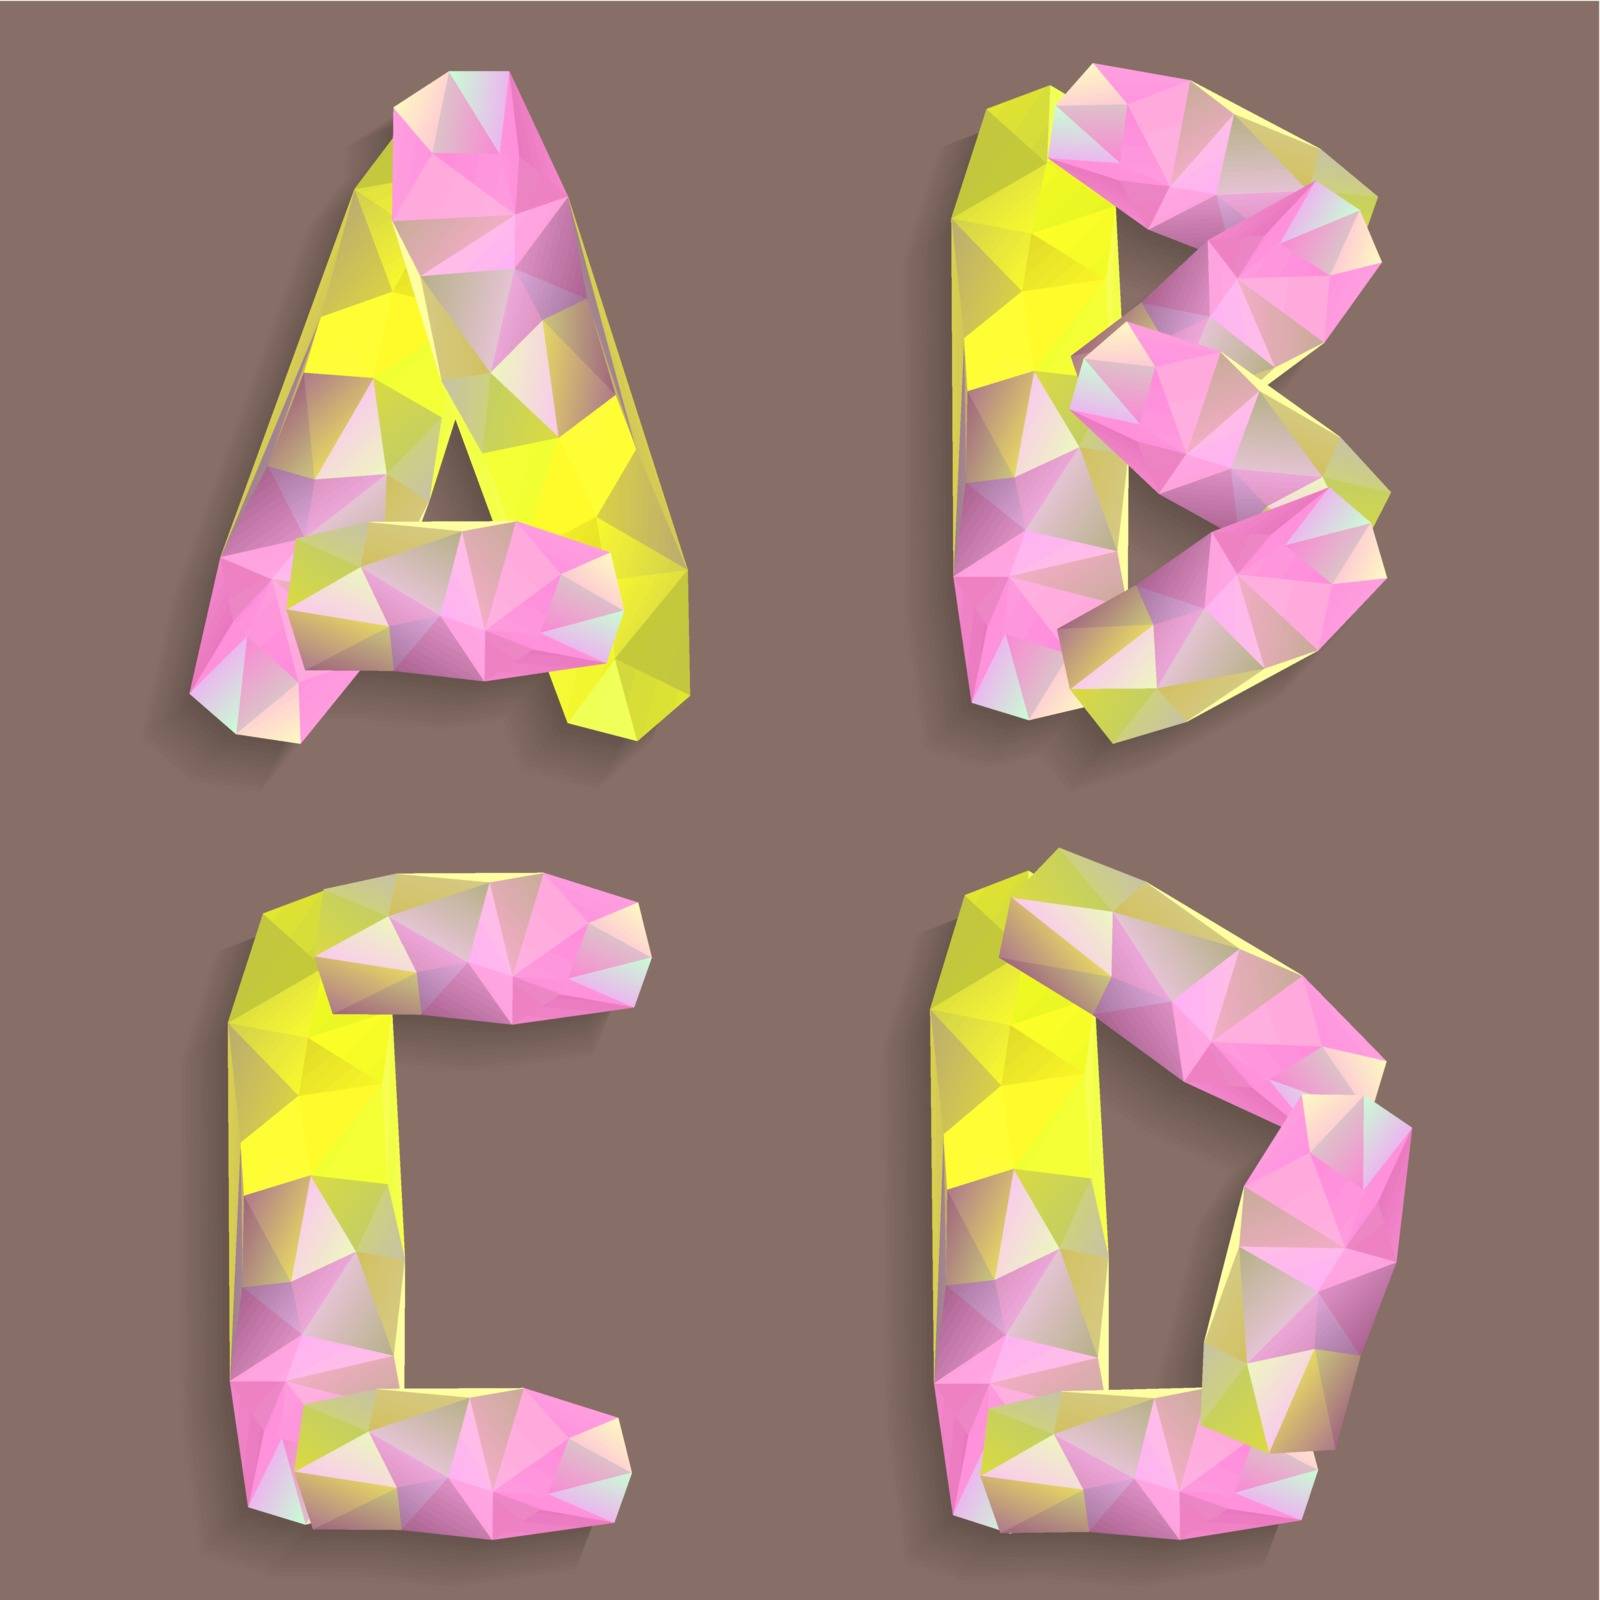 Geometric crystal alphabet. Letters A, B, C, D